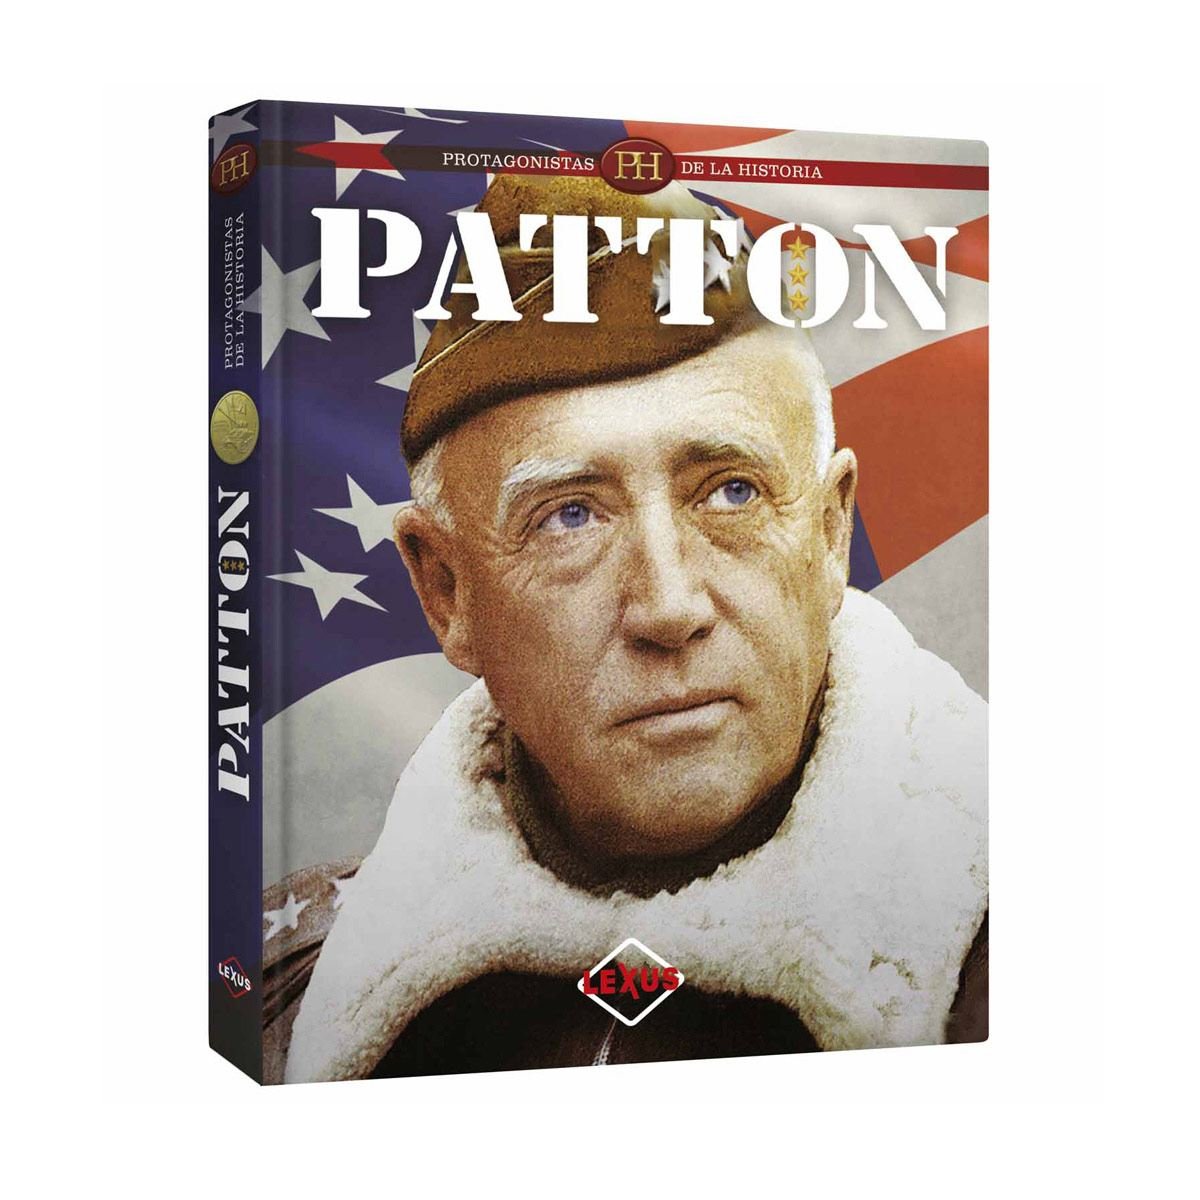 Patton - Protagonistas De La Historia